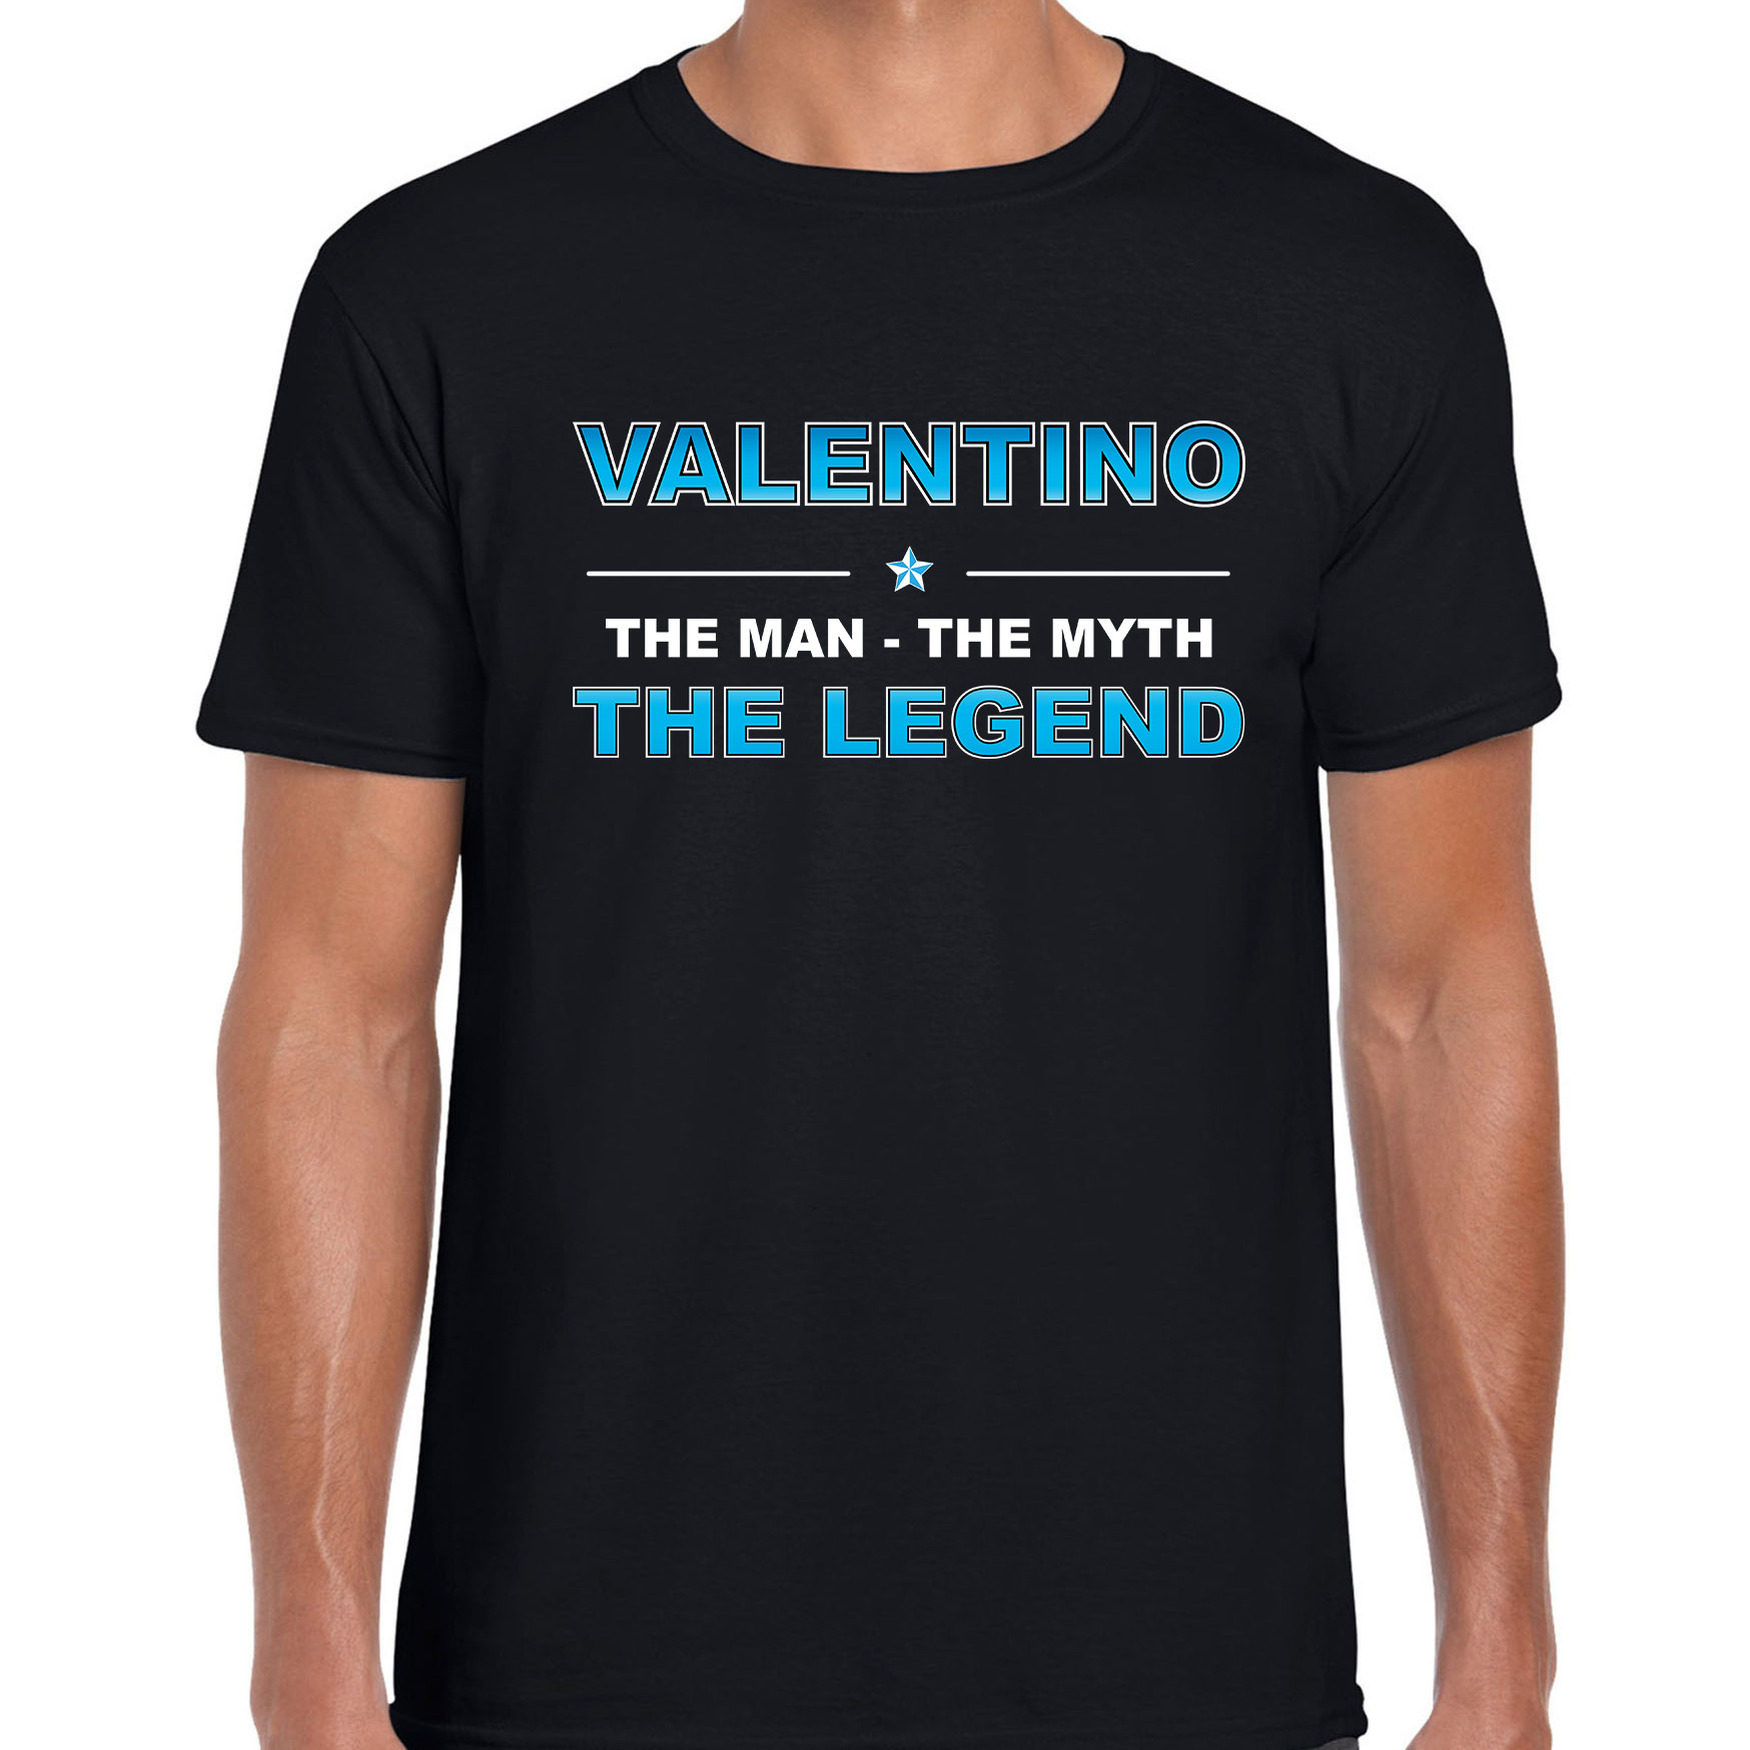 Naam cadeau t-shirt Valentino - the legend zwart voor heren